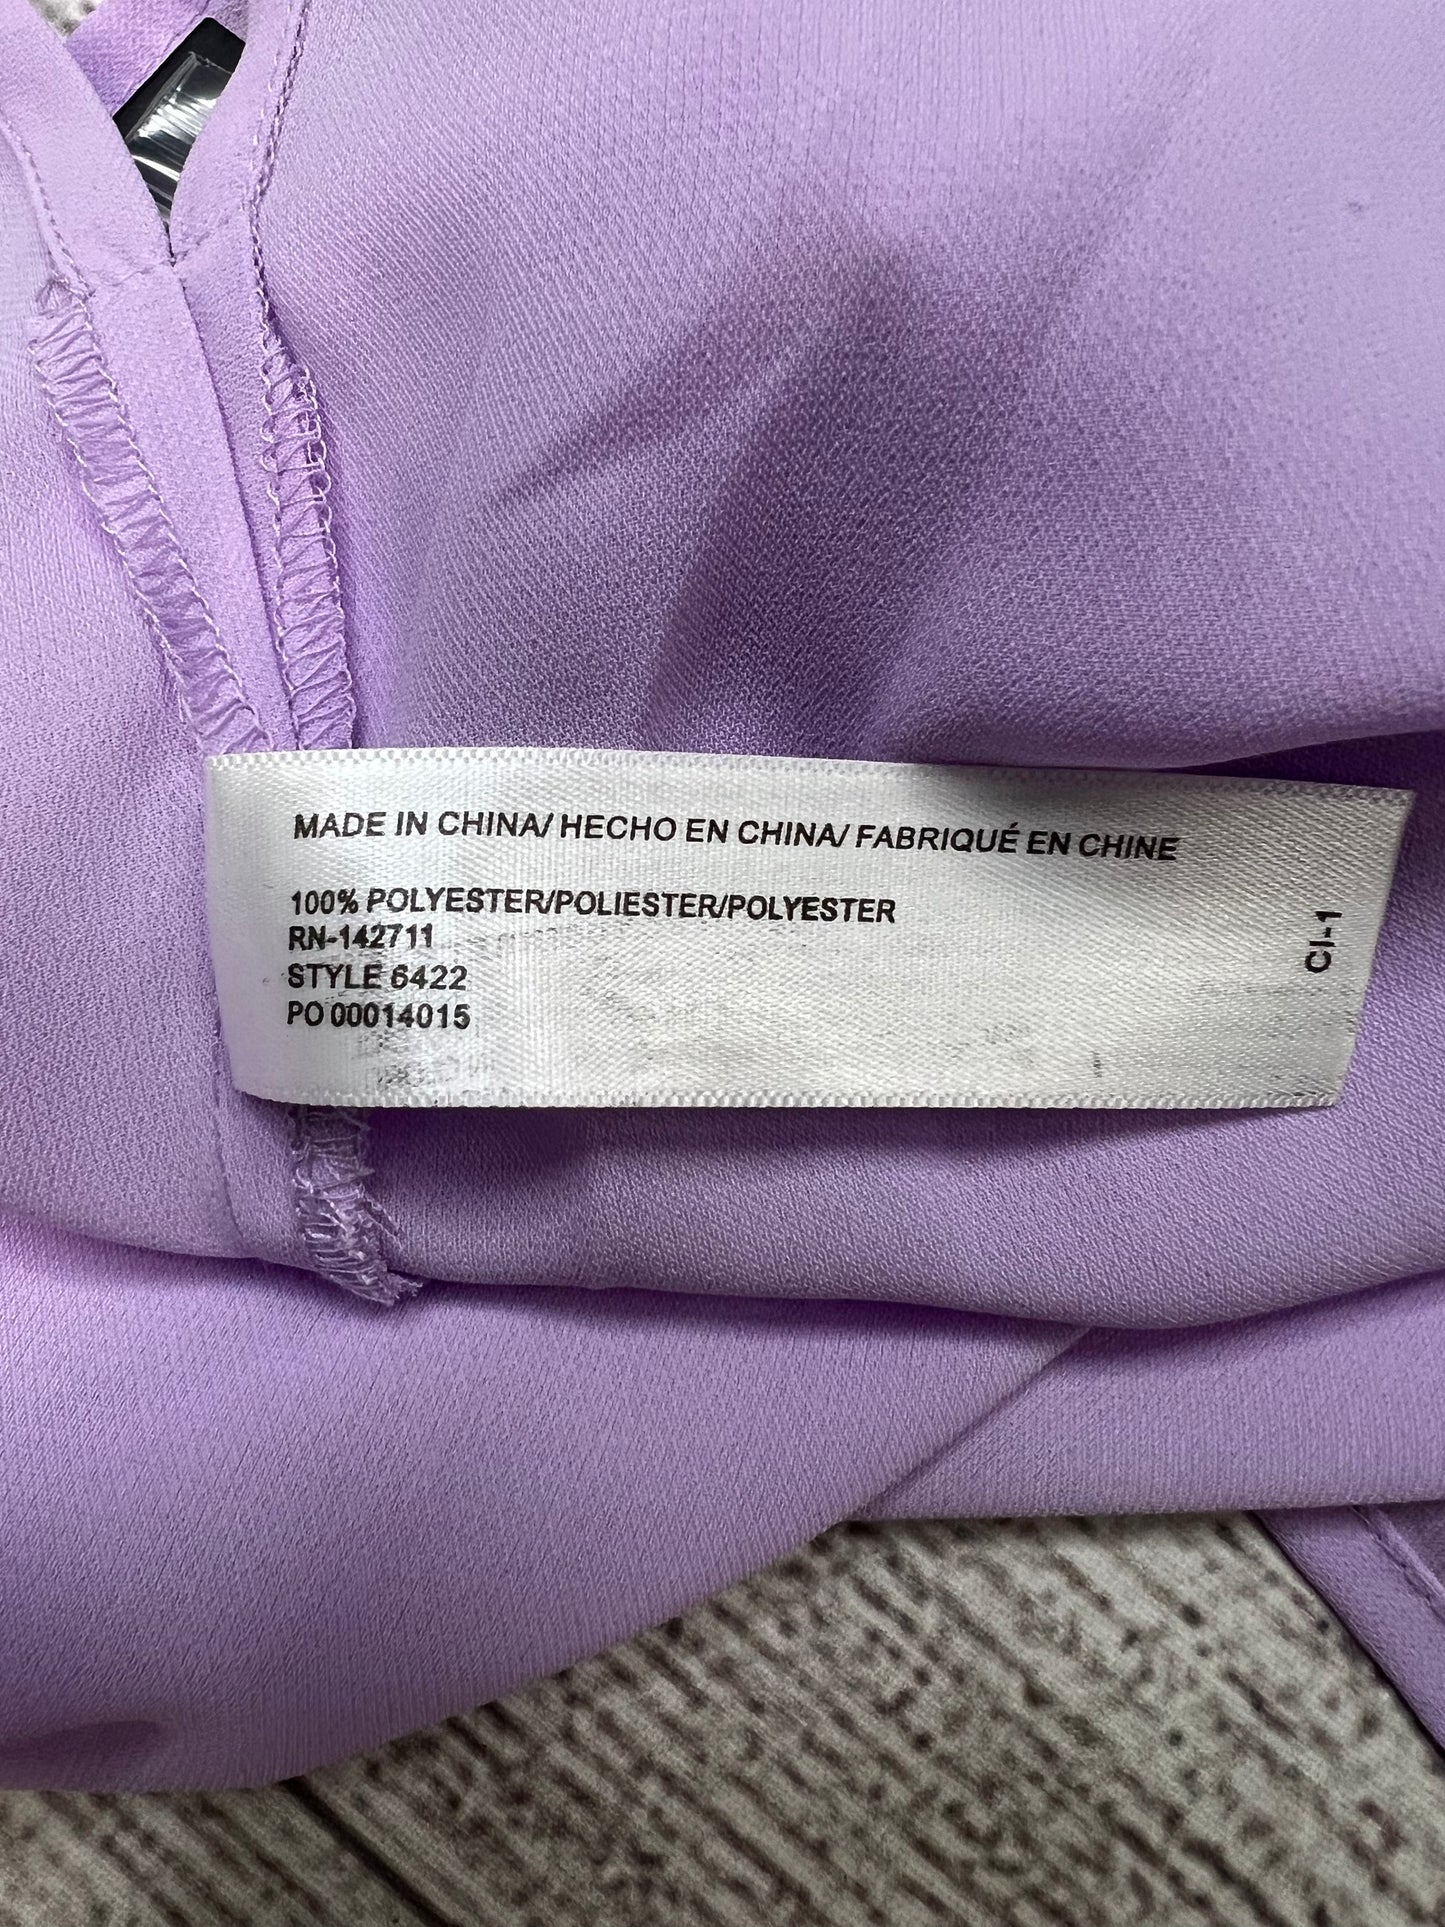 Purple Top Short Sleeve Eloquii, Size 1x